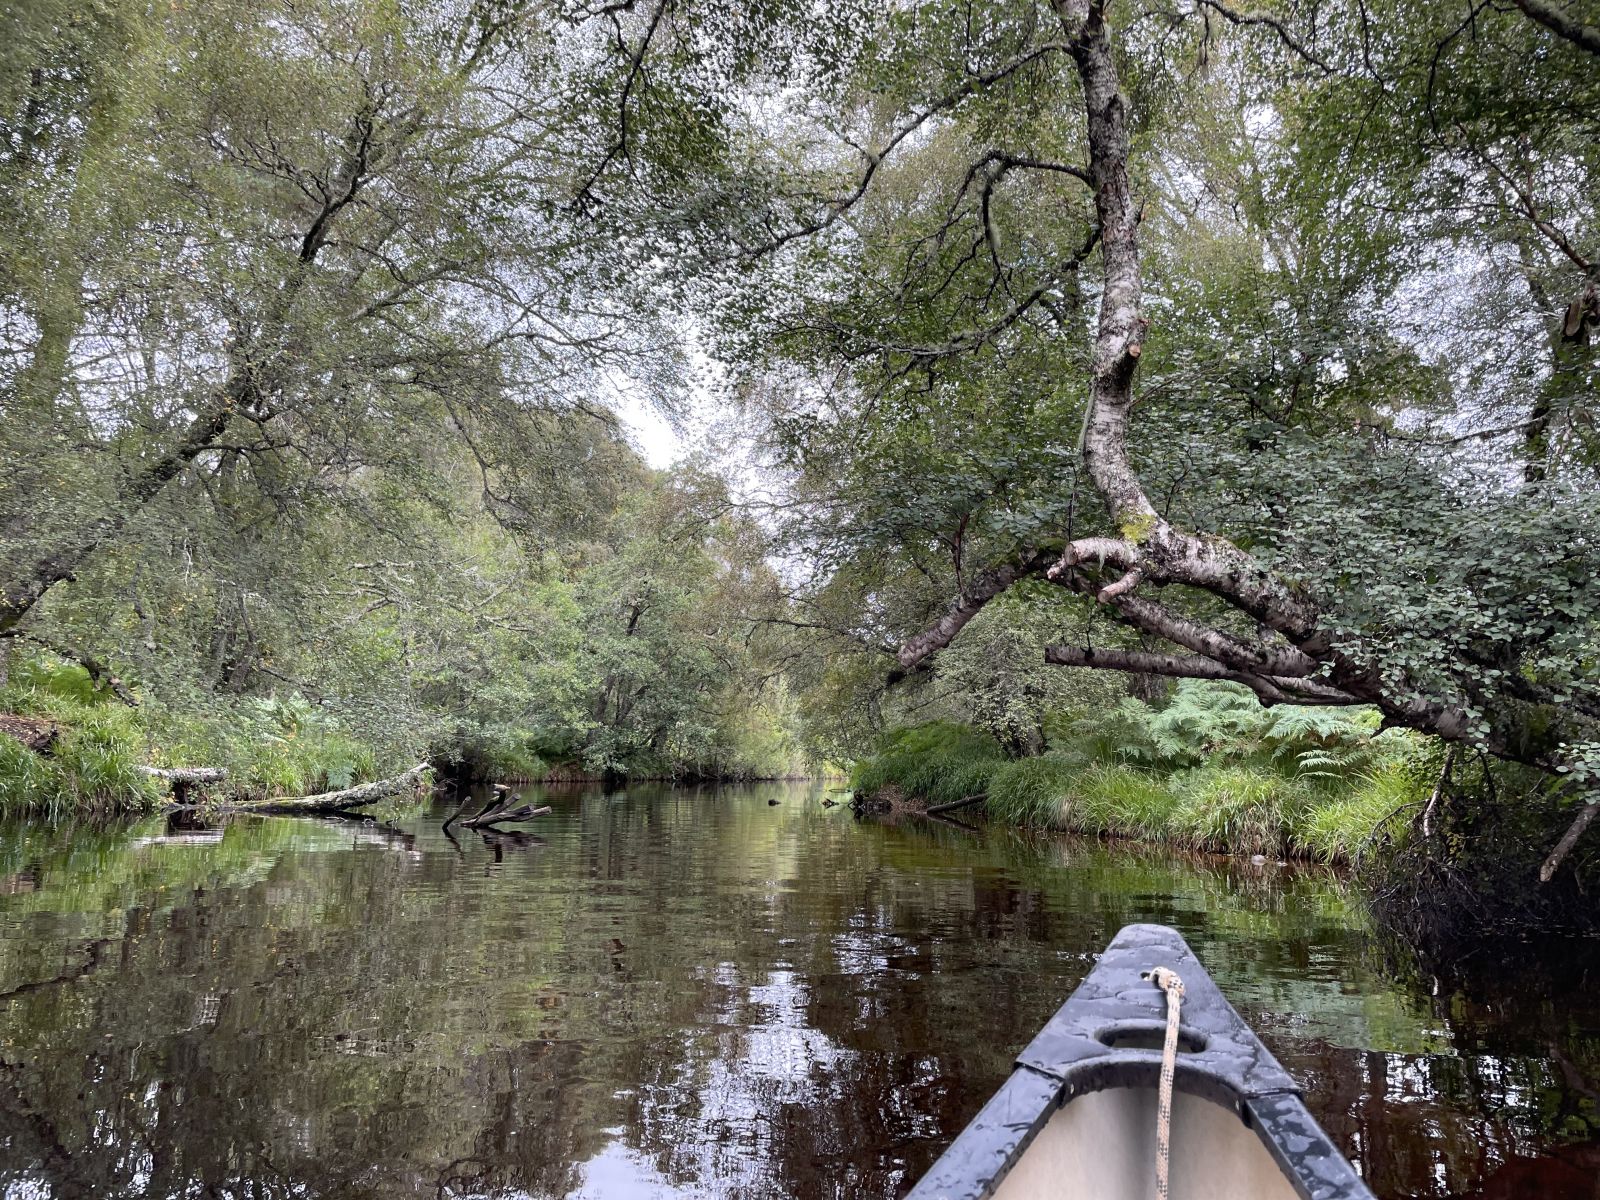 Loch Morlich kanoe trip